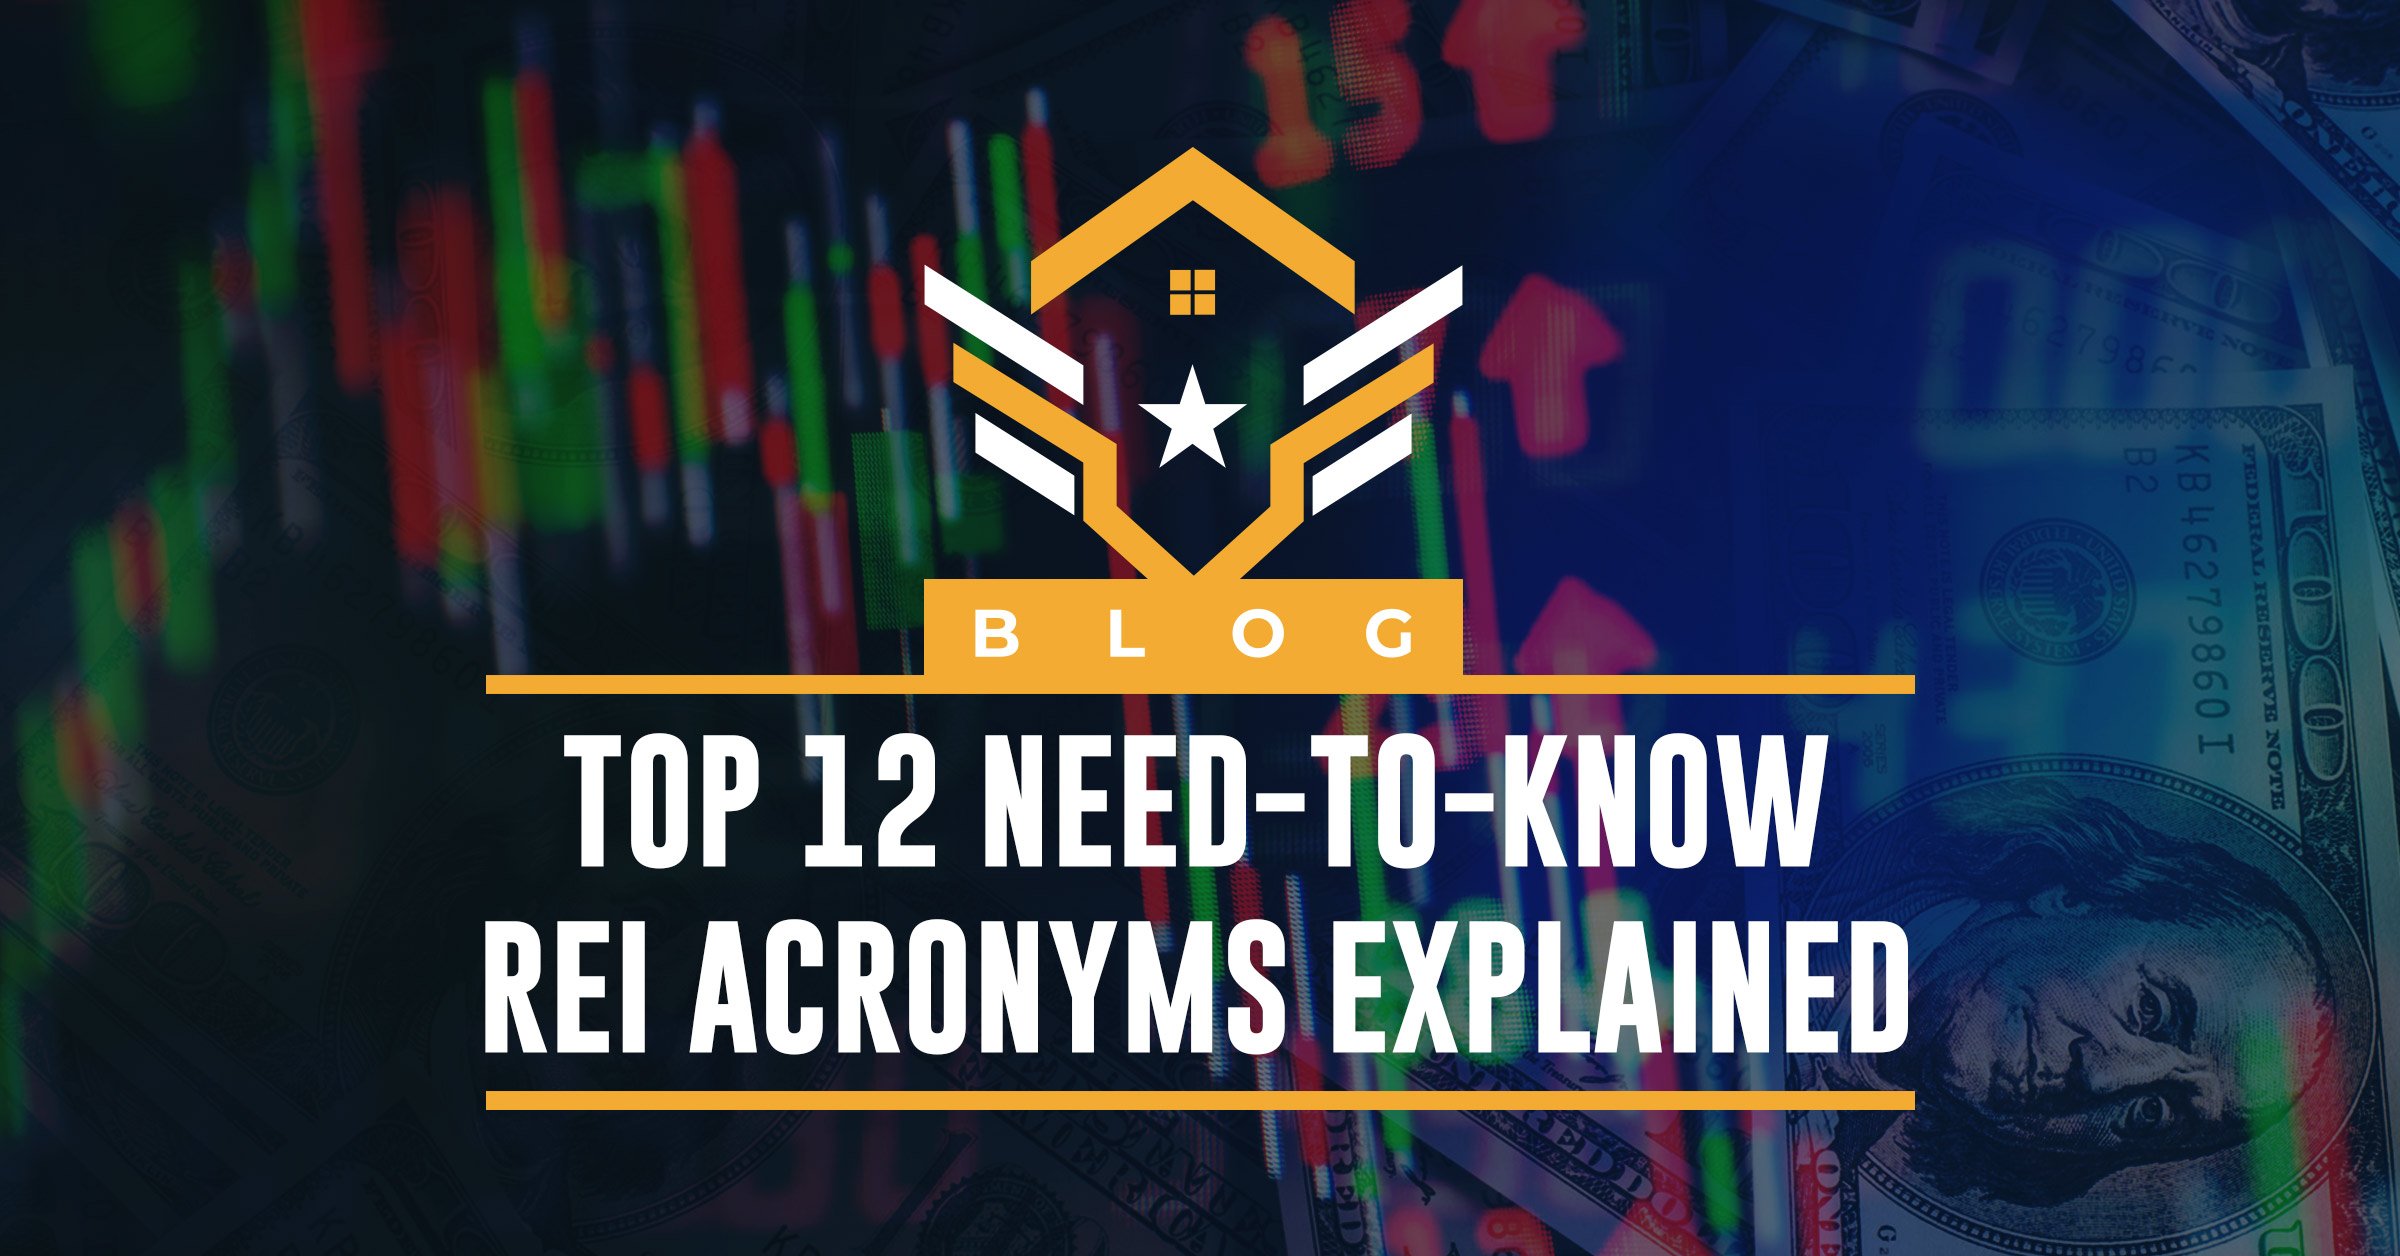 REI acronyms explained